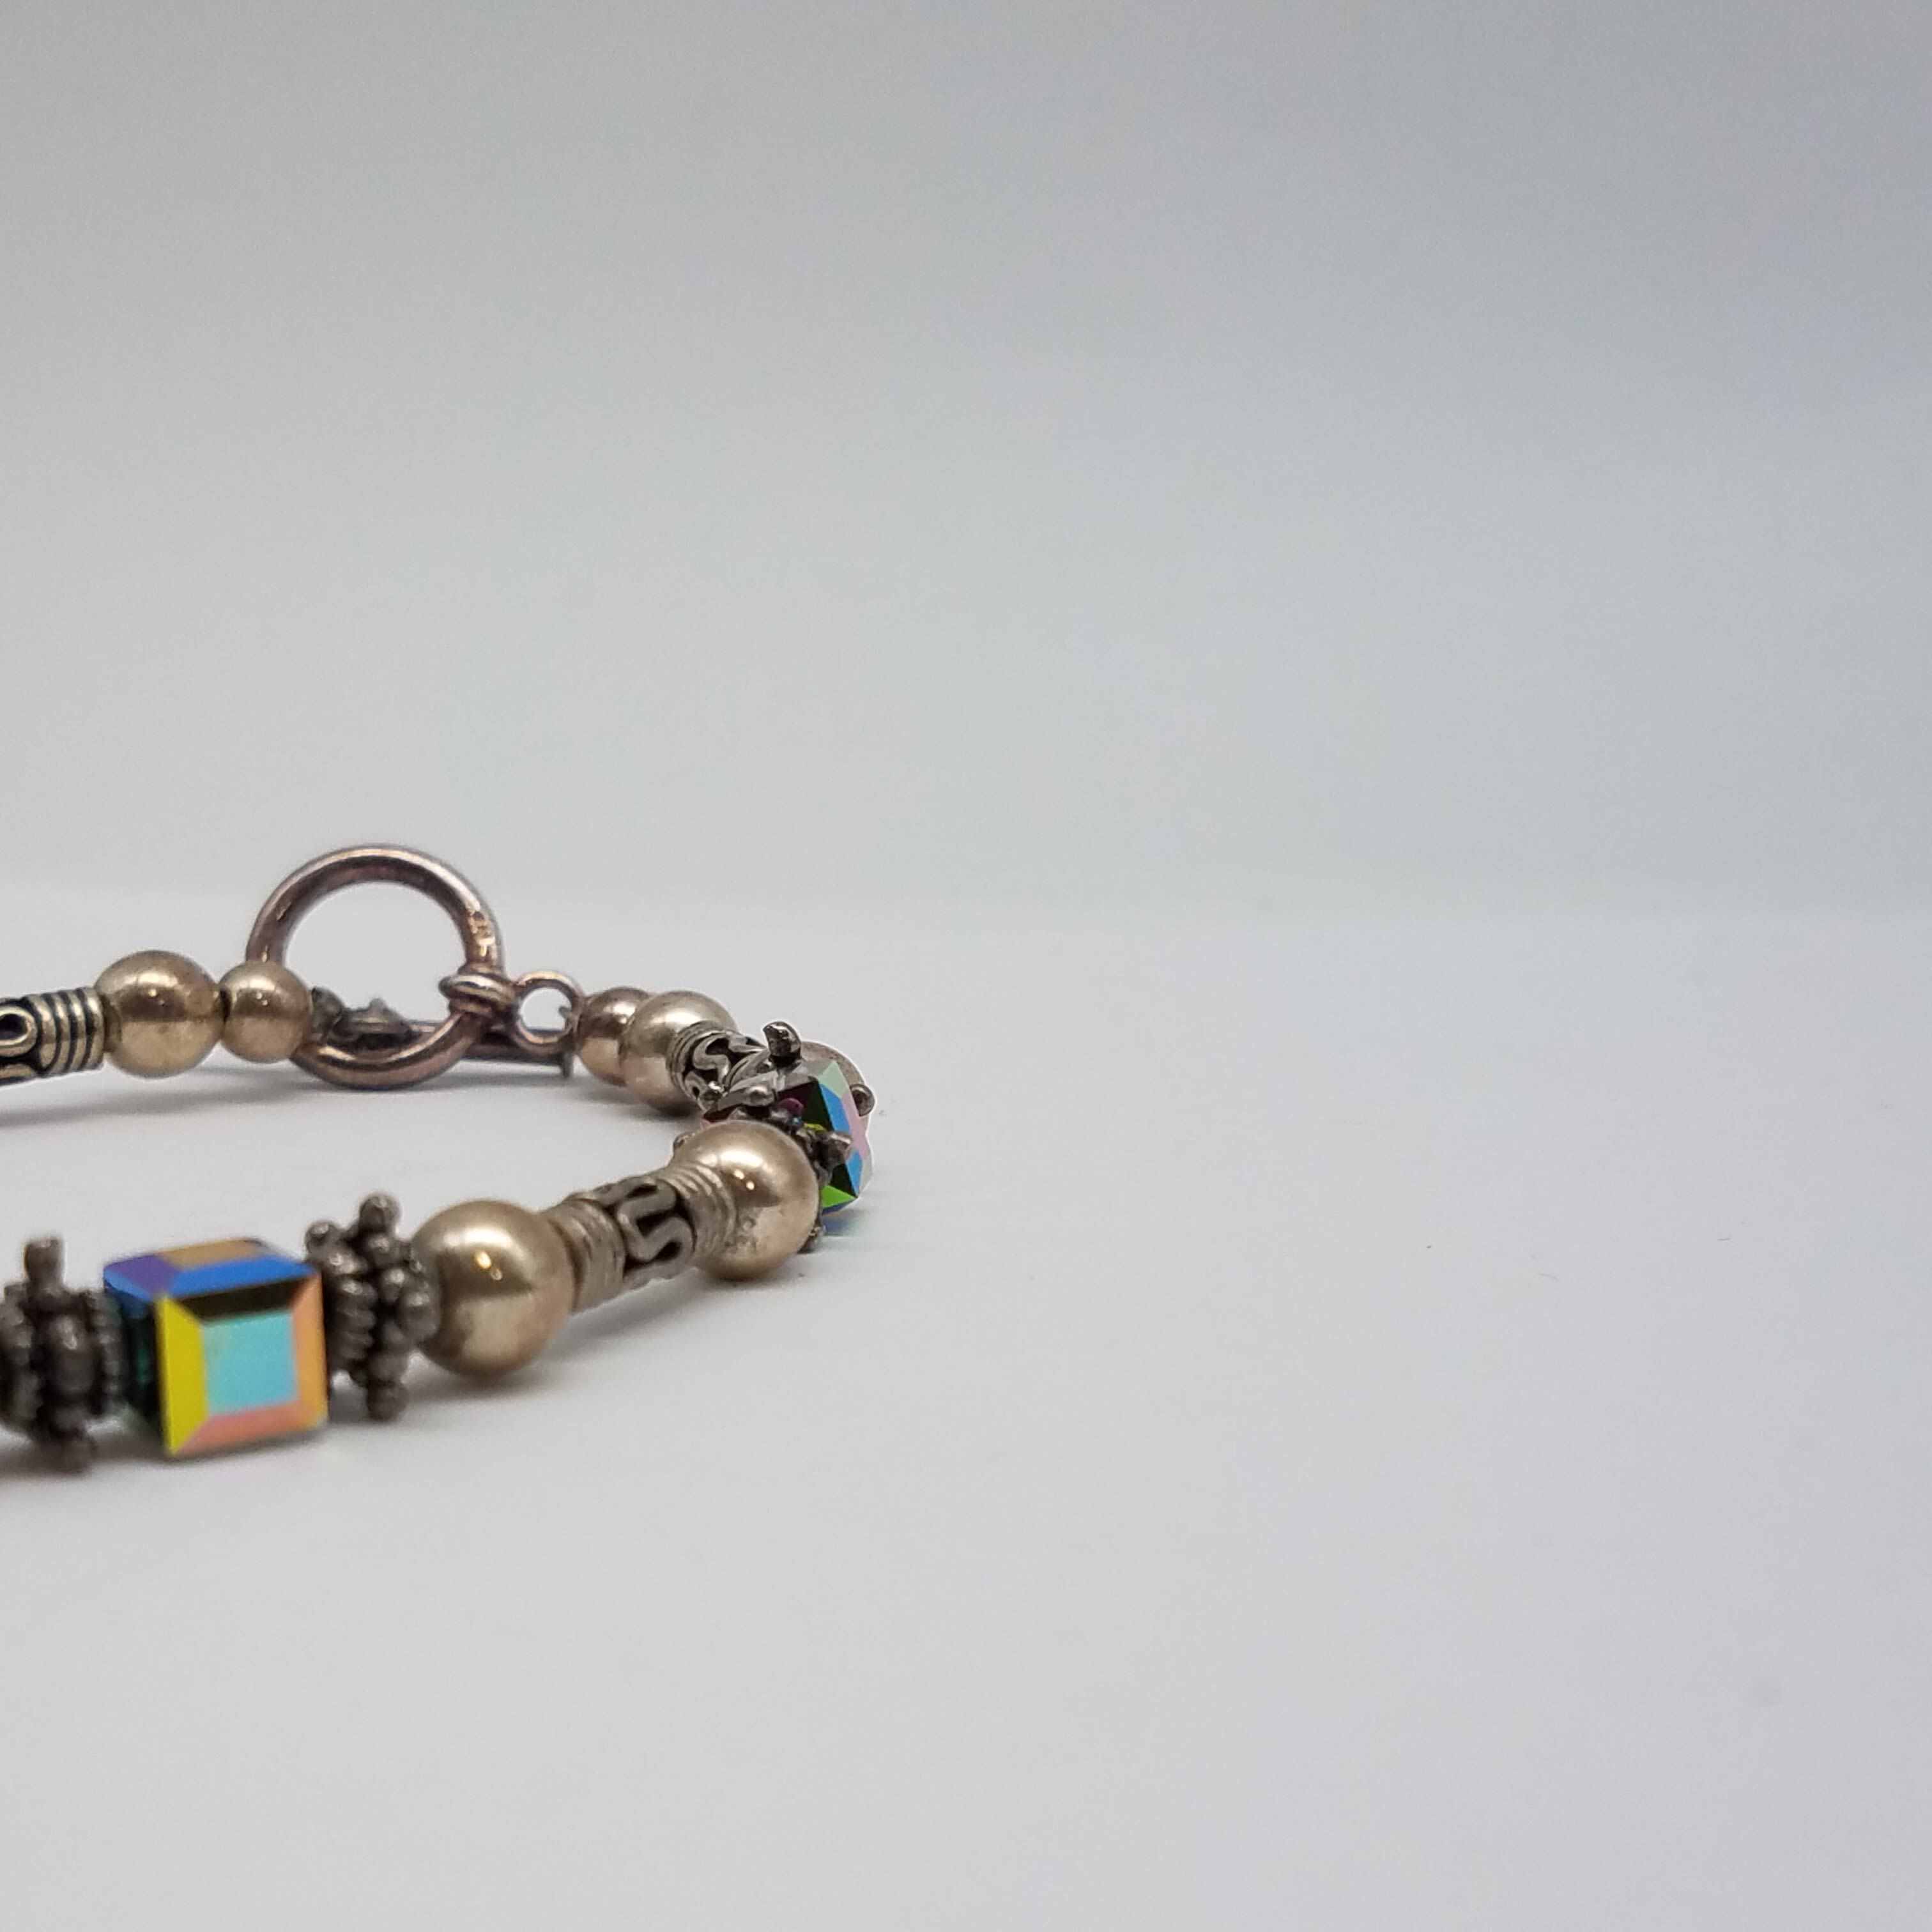 Beaded roach clip/bracelet helper - Bracelets | Facebook Marketplace |  Facebook